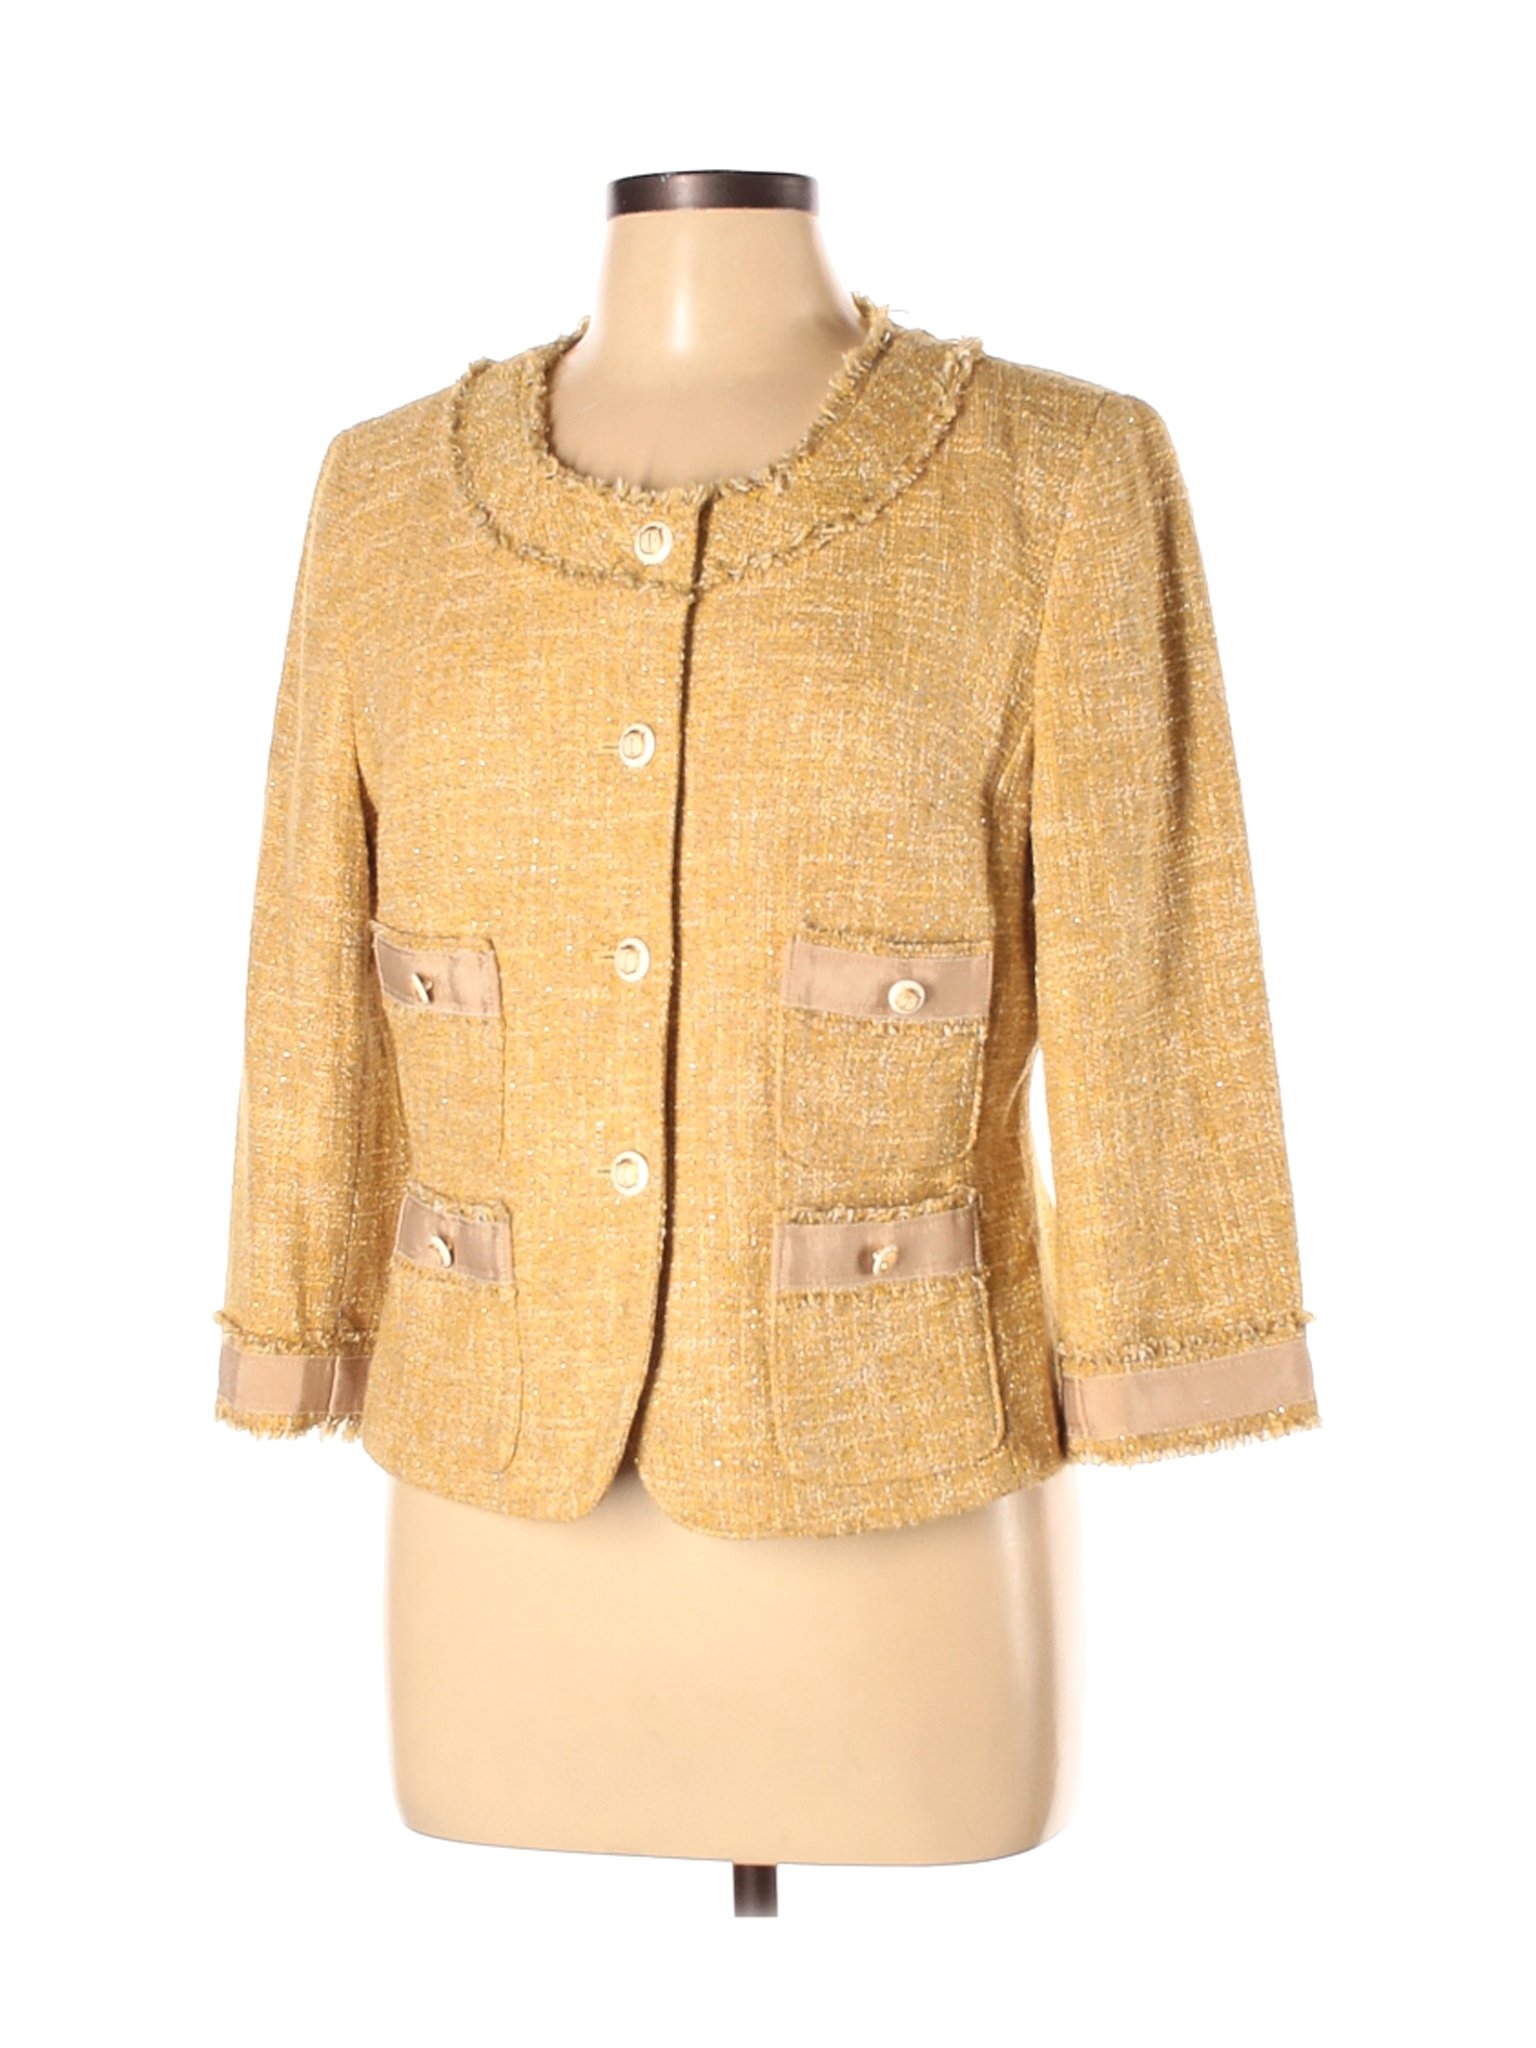 Talbots Women Yellow Jacket 12 Petites | eBay